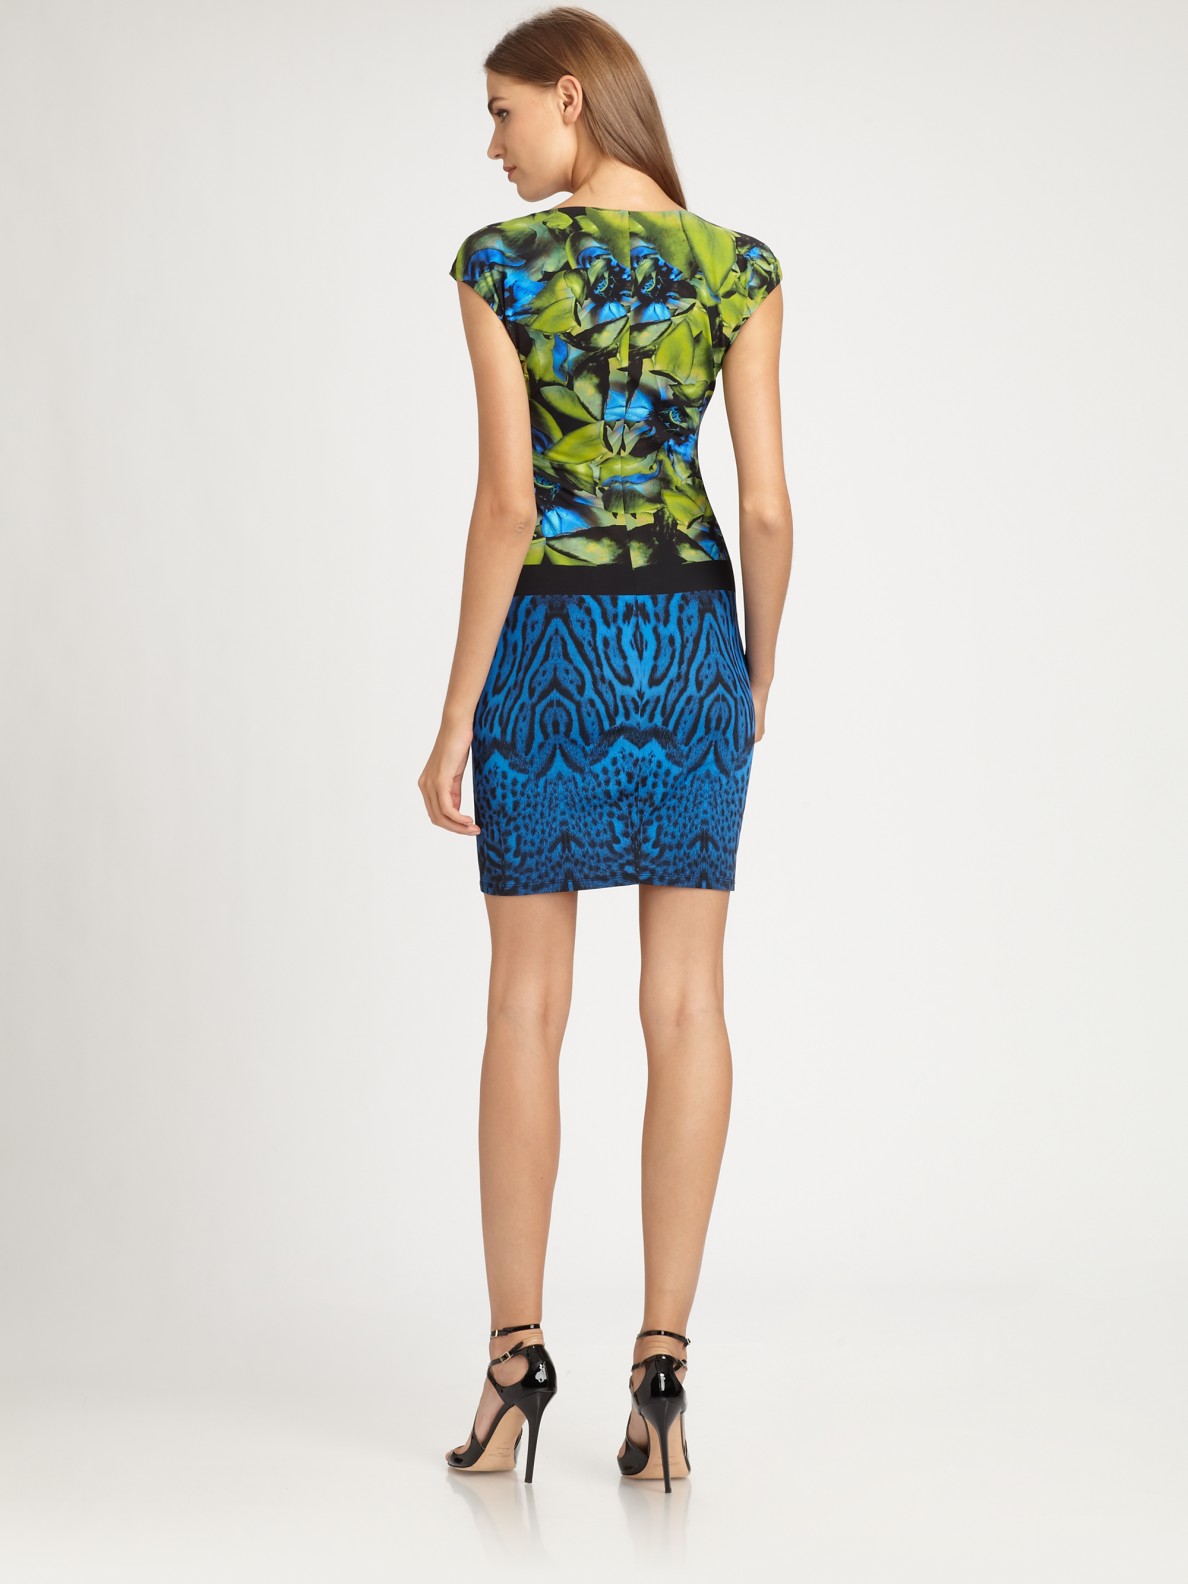 Lyst - Roberto Cavalli Printed Dress in Blue